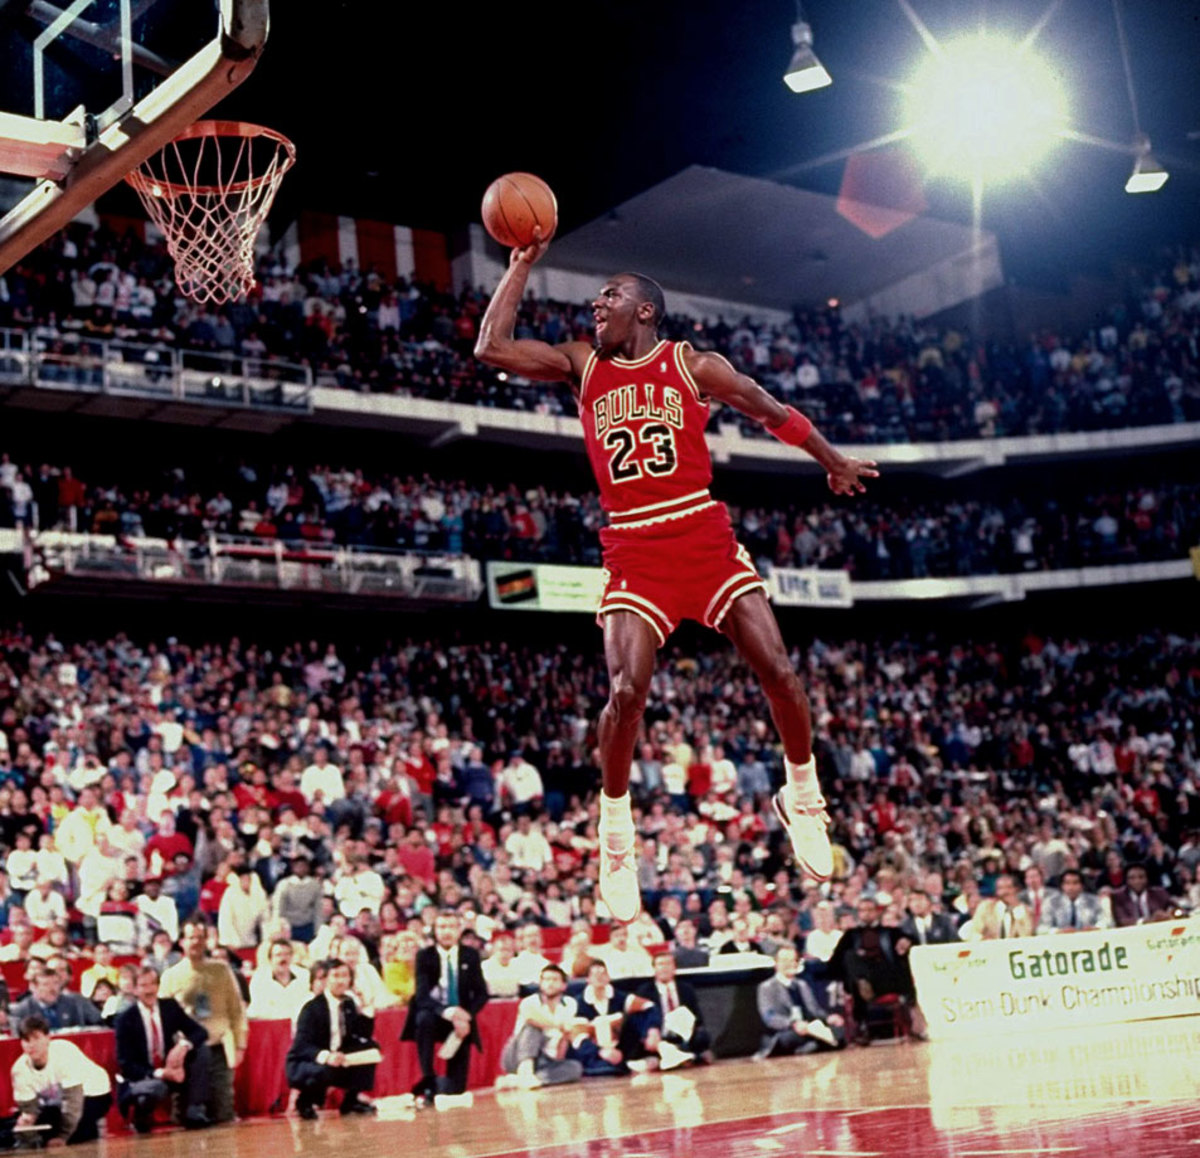 Michael Jordan Signature Dunk Wallpaper